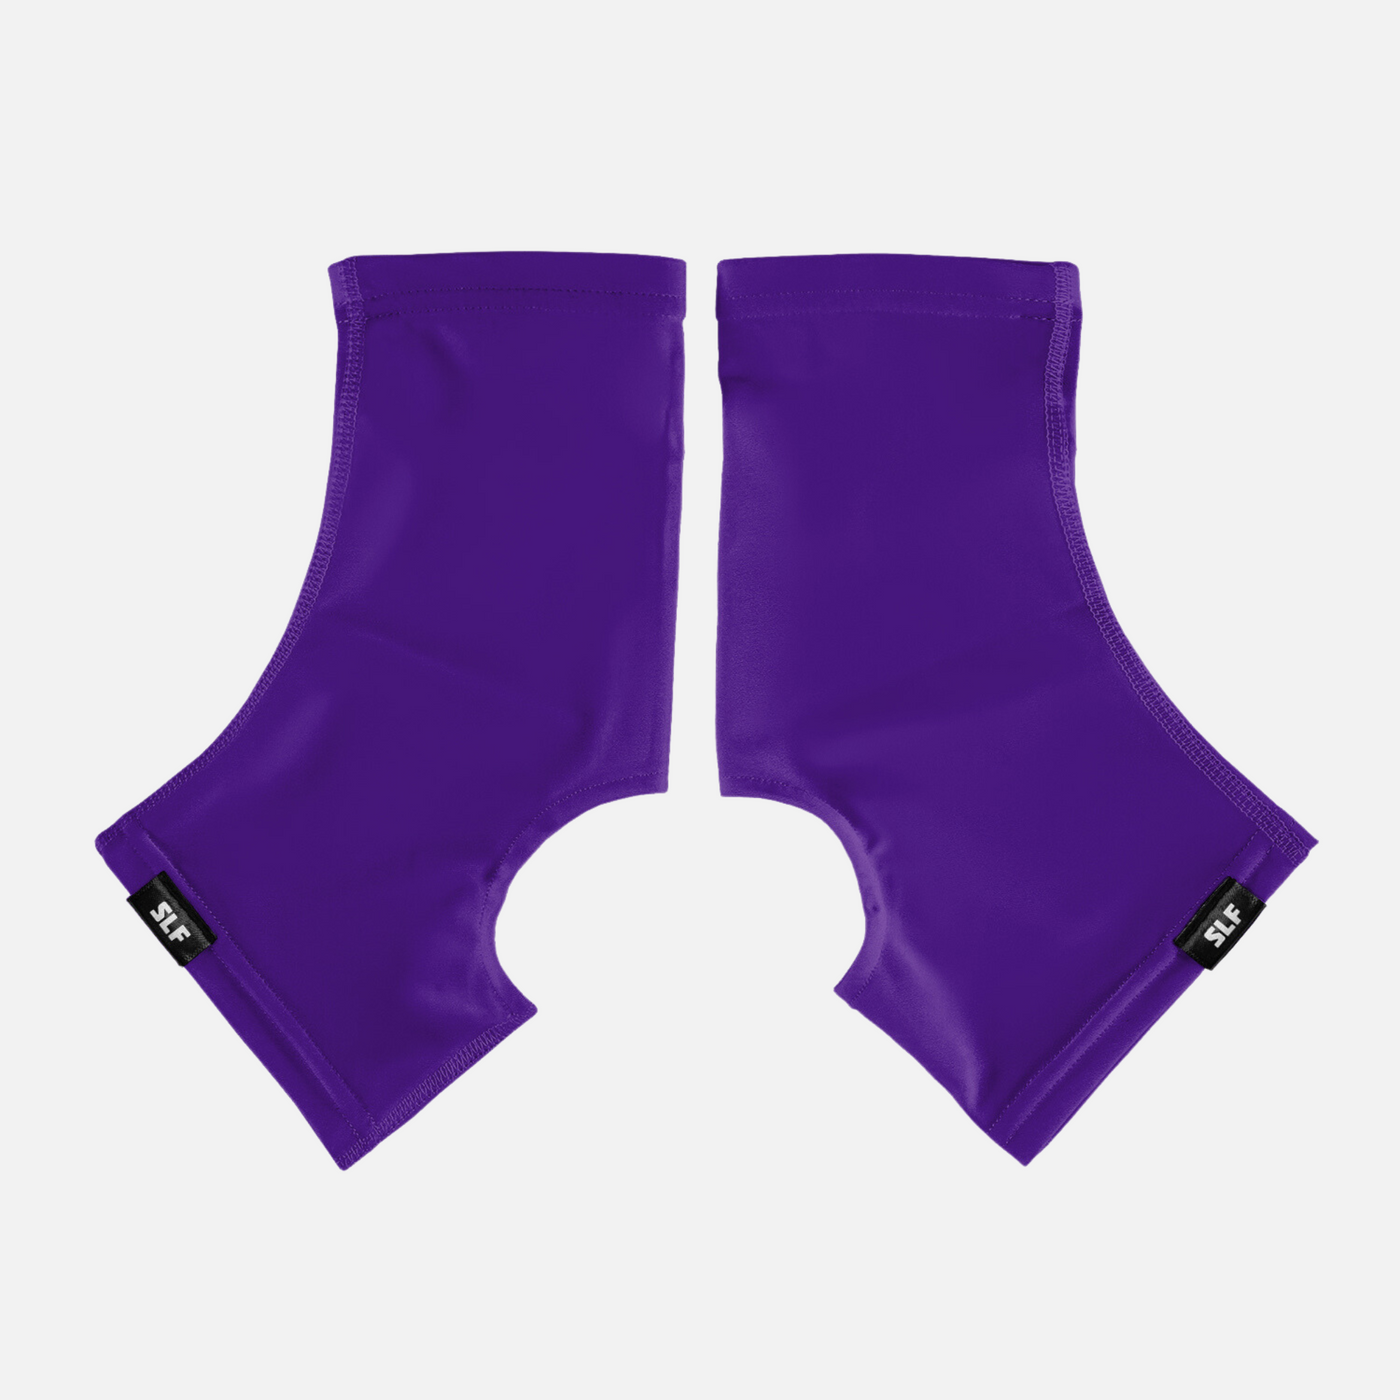 Hue Purple Kids Spats / Cleat Covers